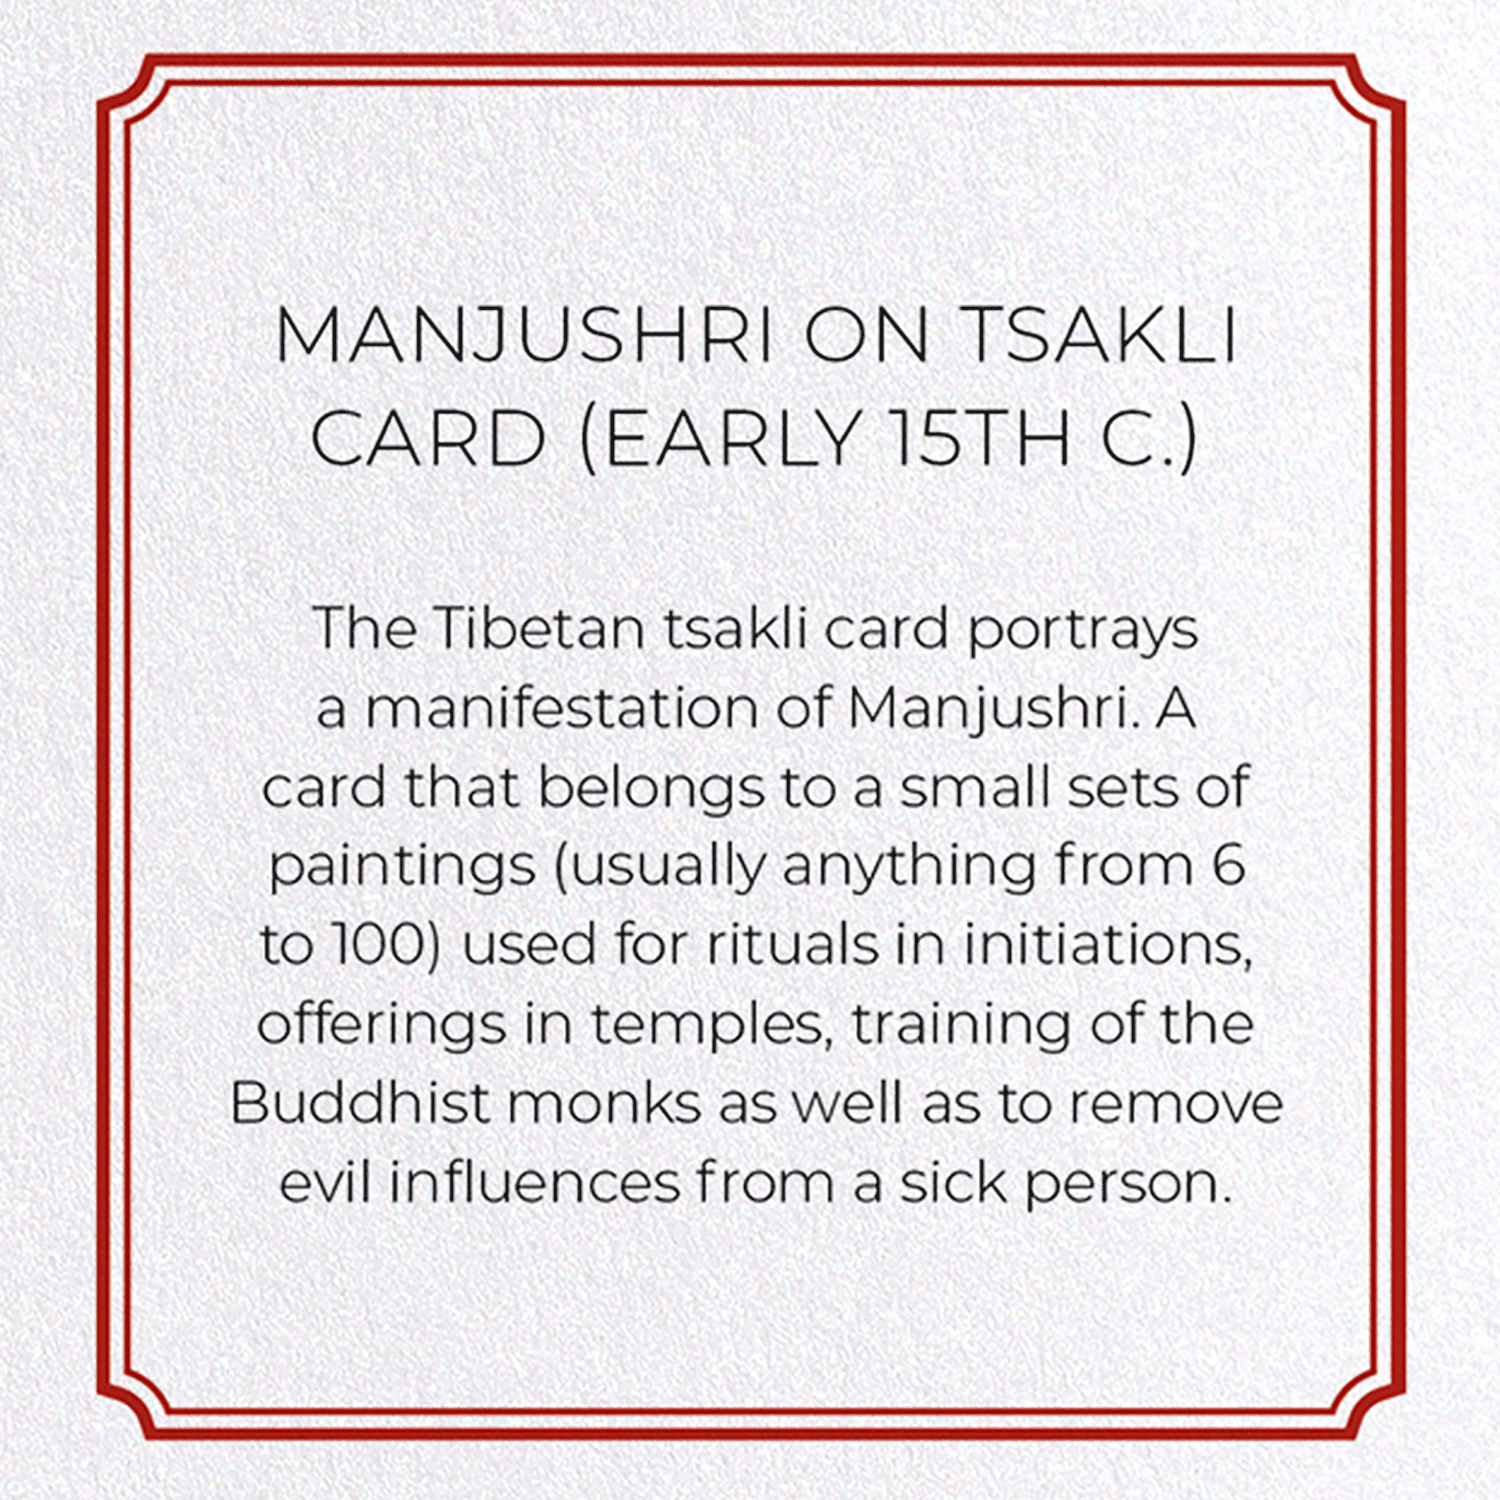 MANJUSHRI ON TSAKLI CARD (EARLY 15TH C.)